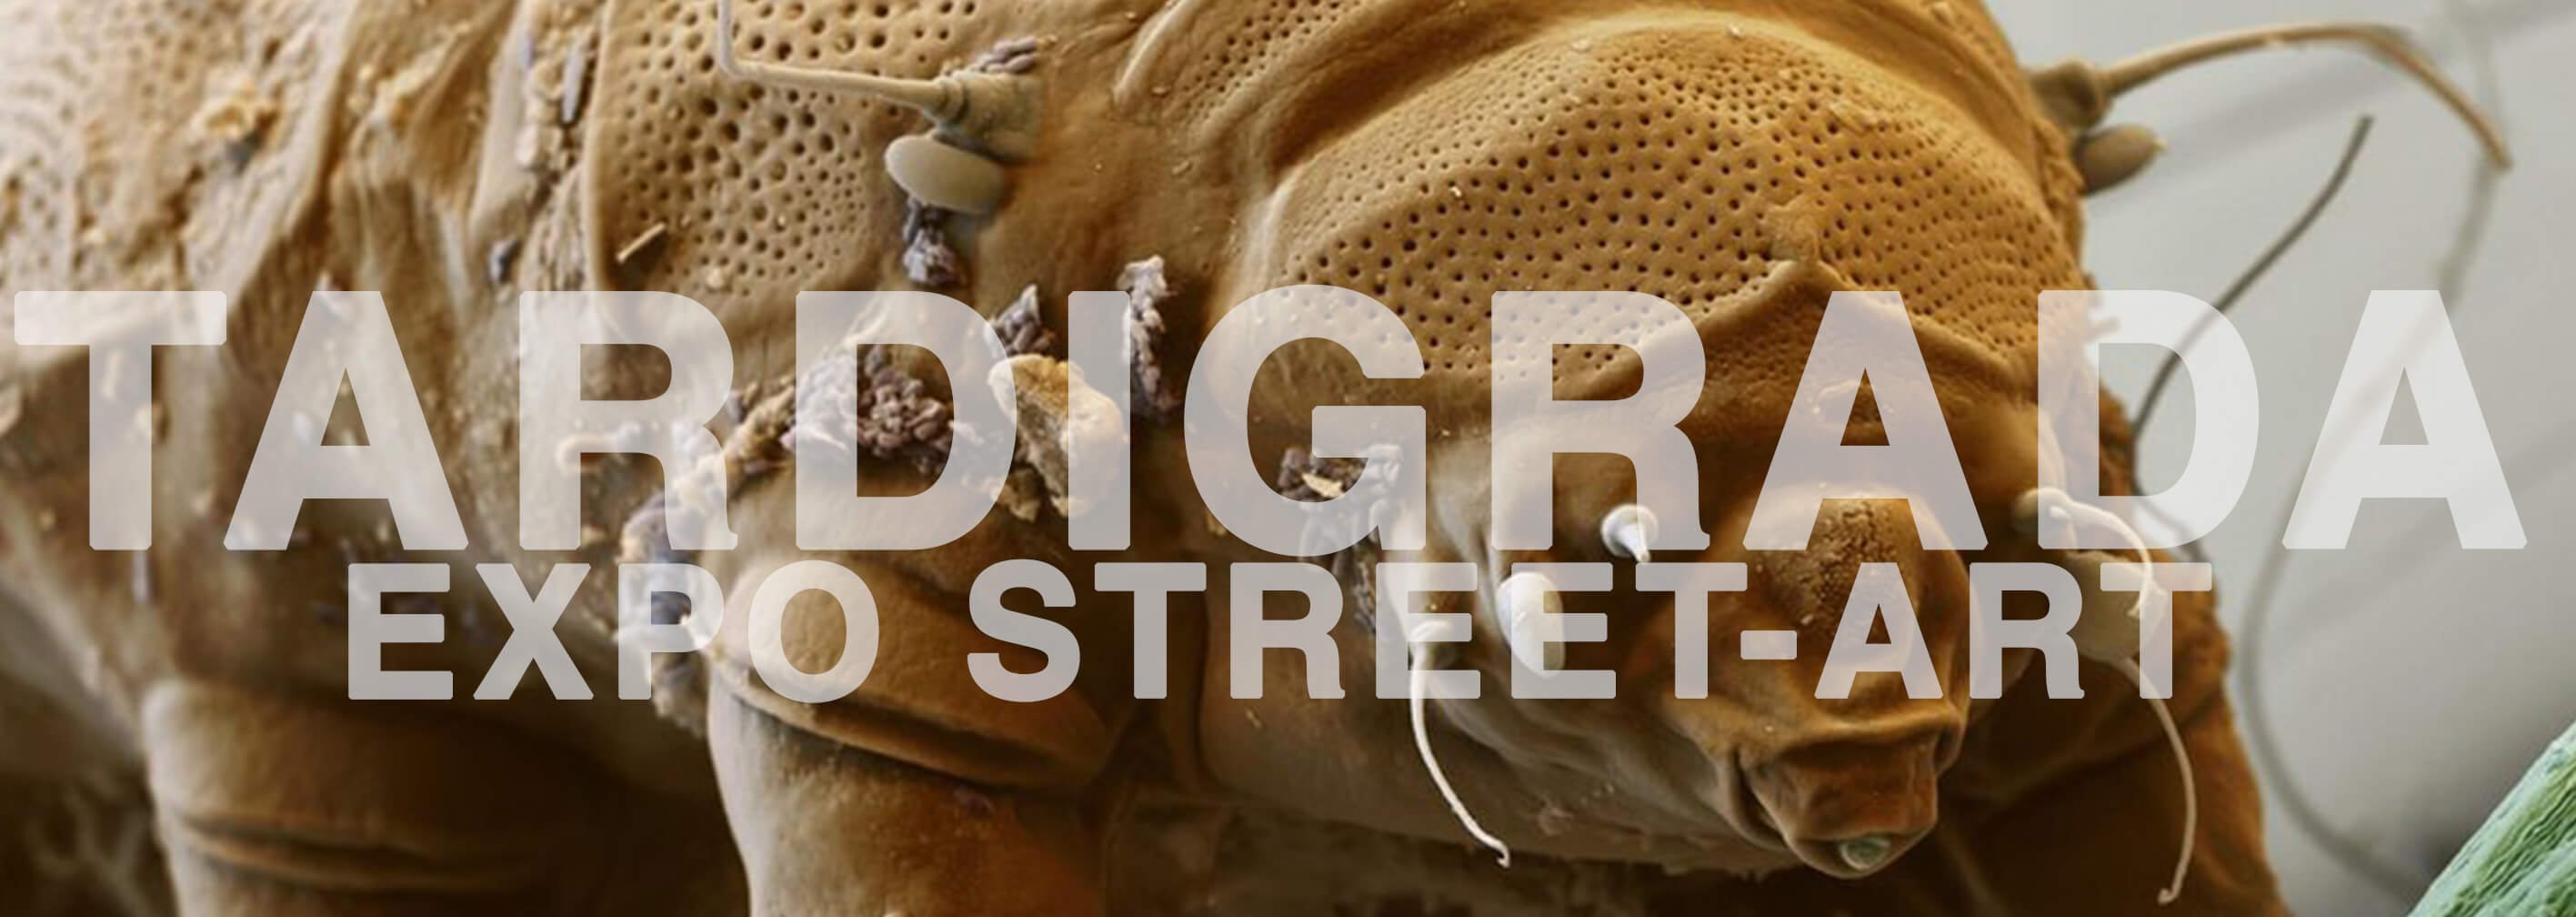 design and more tardigrade tardigrada exposition street art